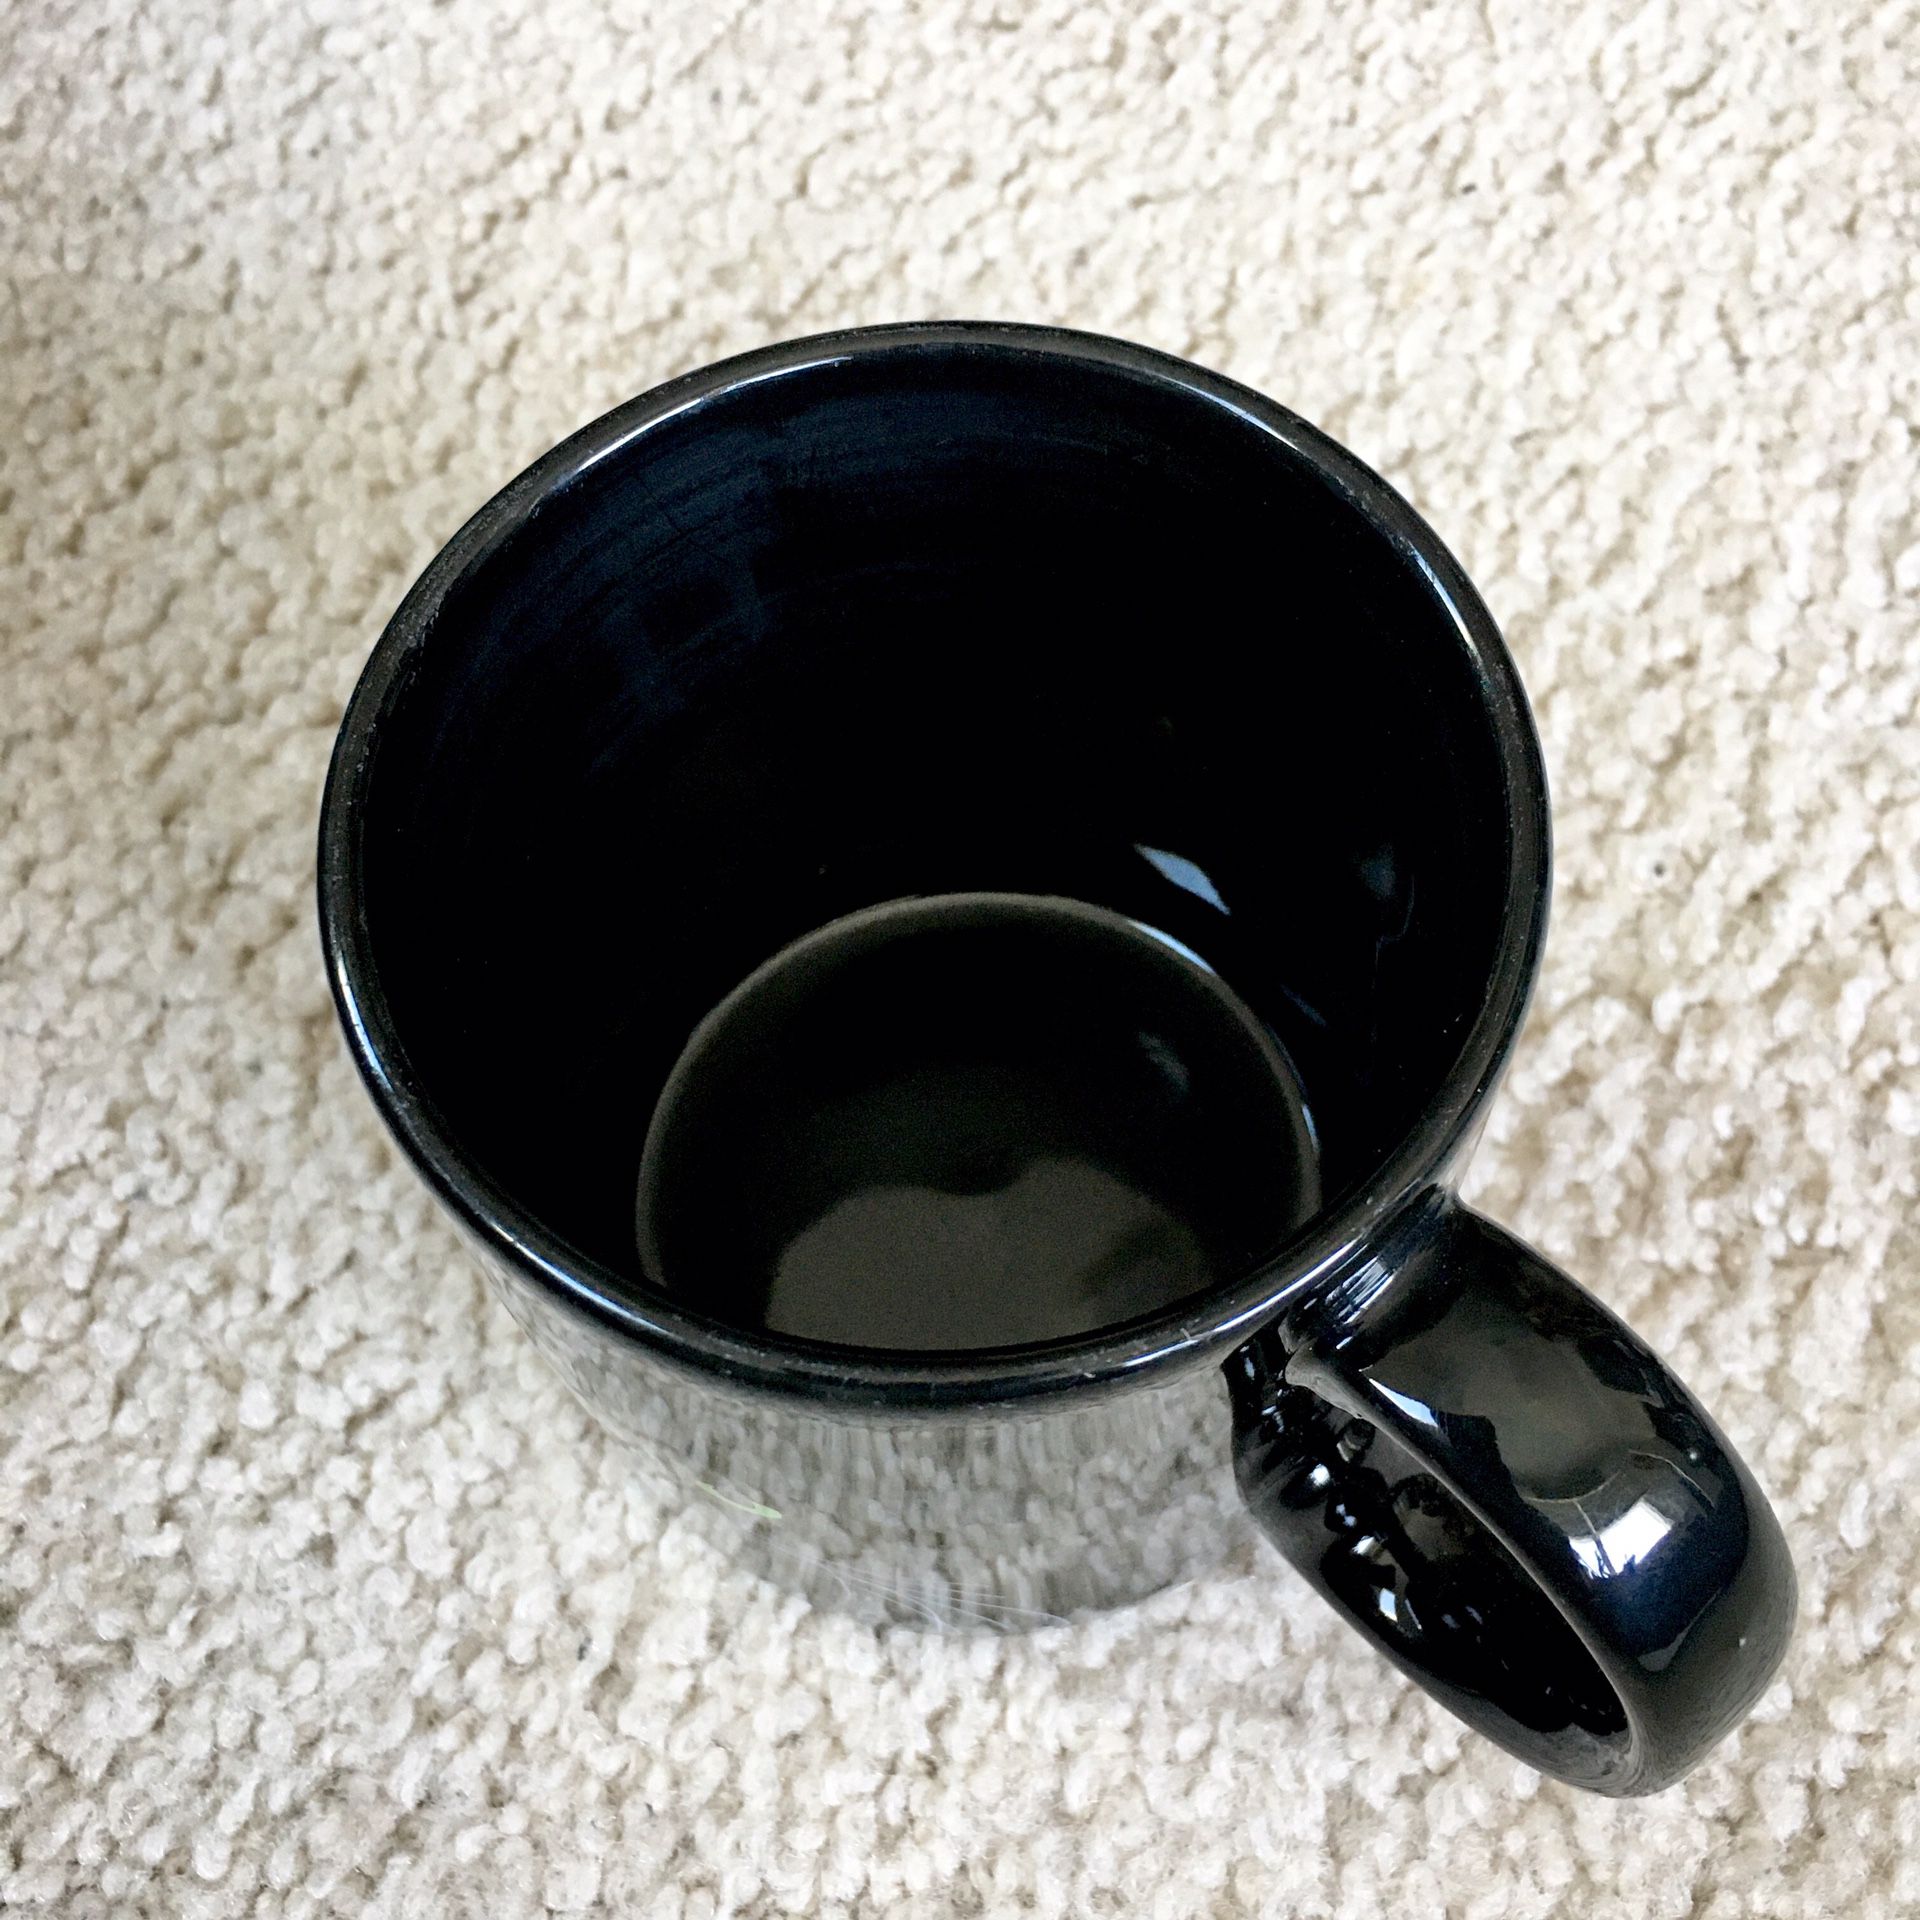 Robert Irvine 20 Oz Black Geo Car Coffee Mug – Cambridge Silversmiths®